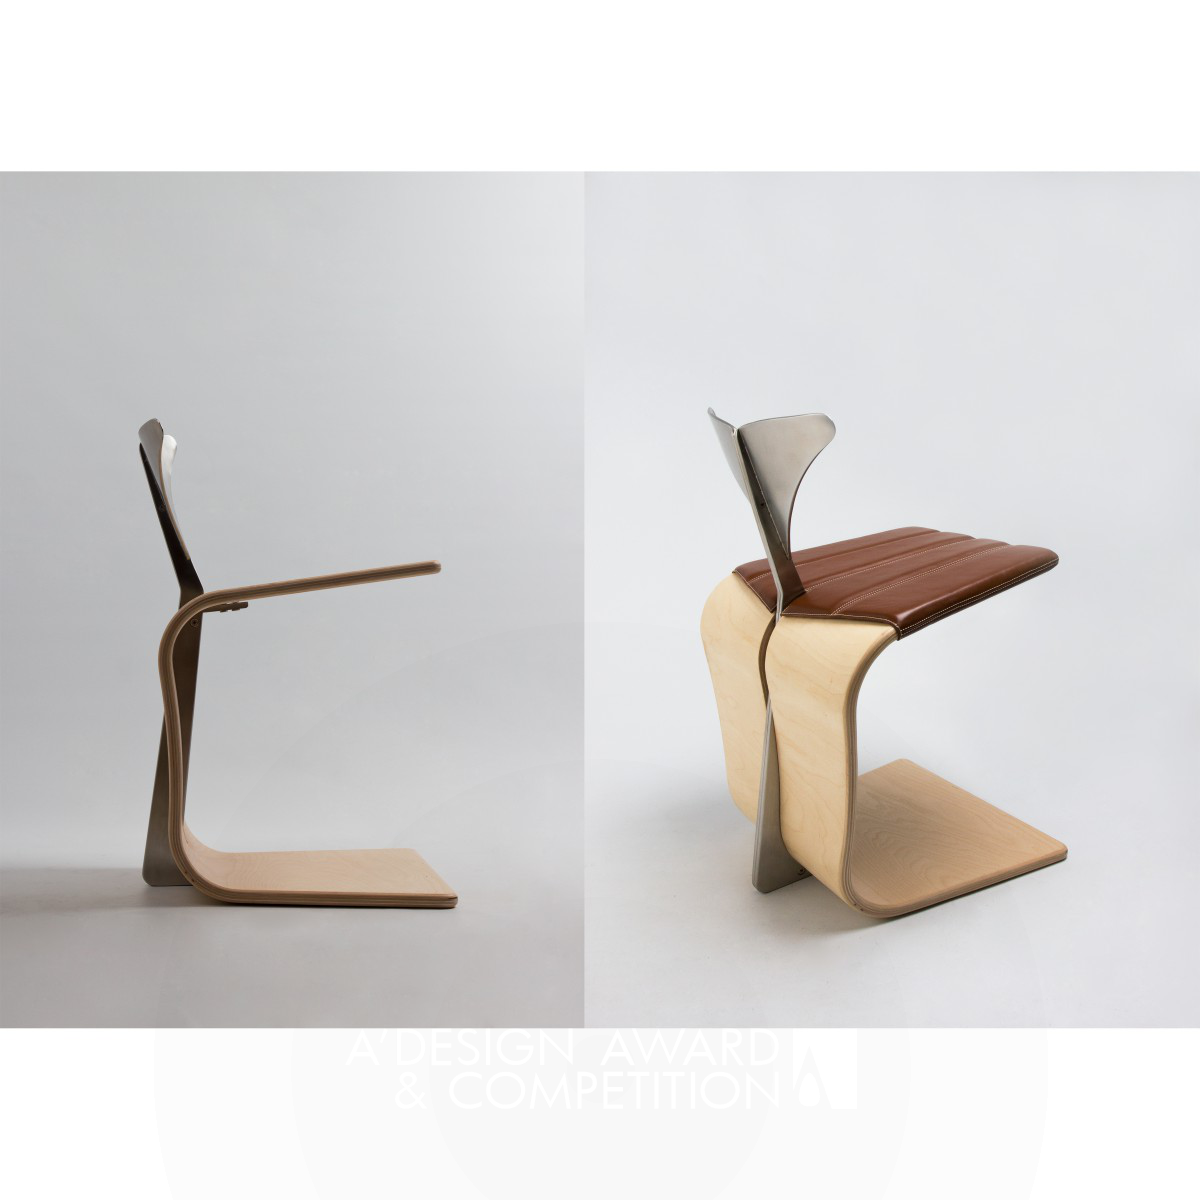 Tail chair chair by In-hwan, Hwang